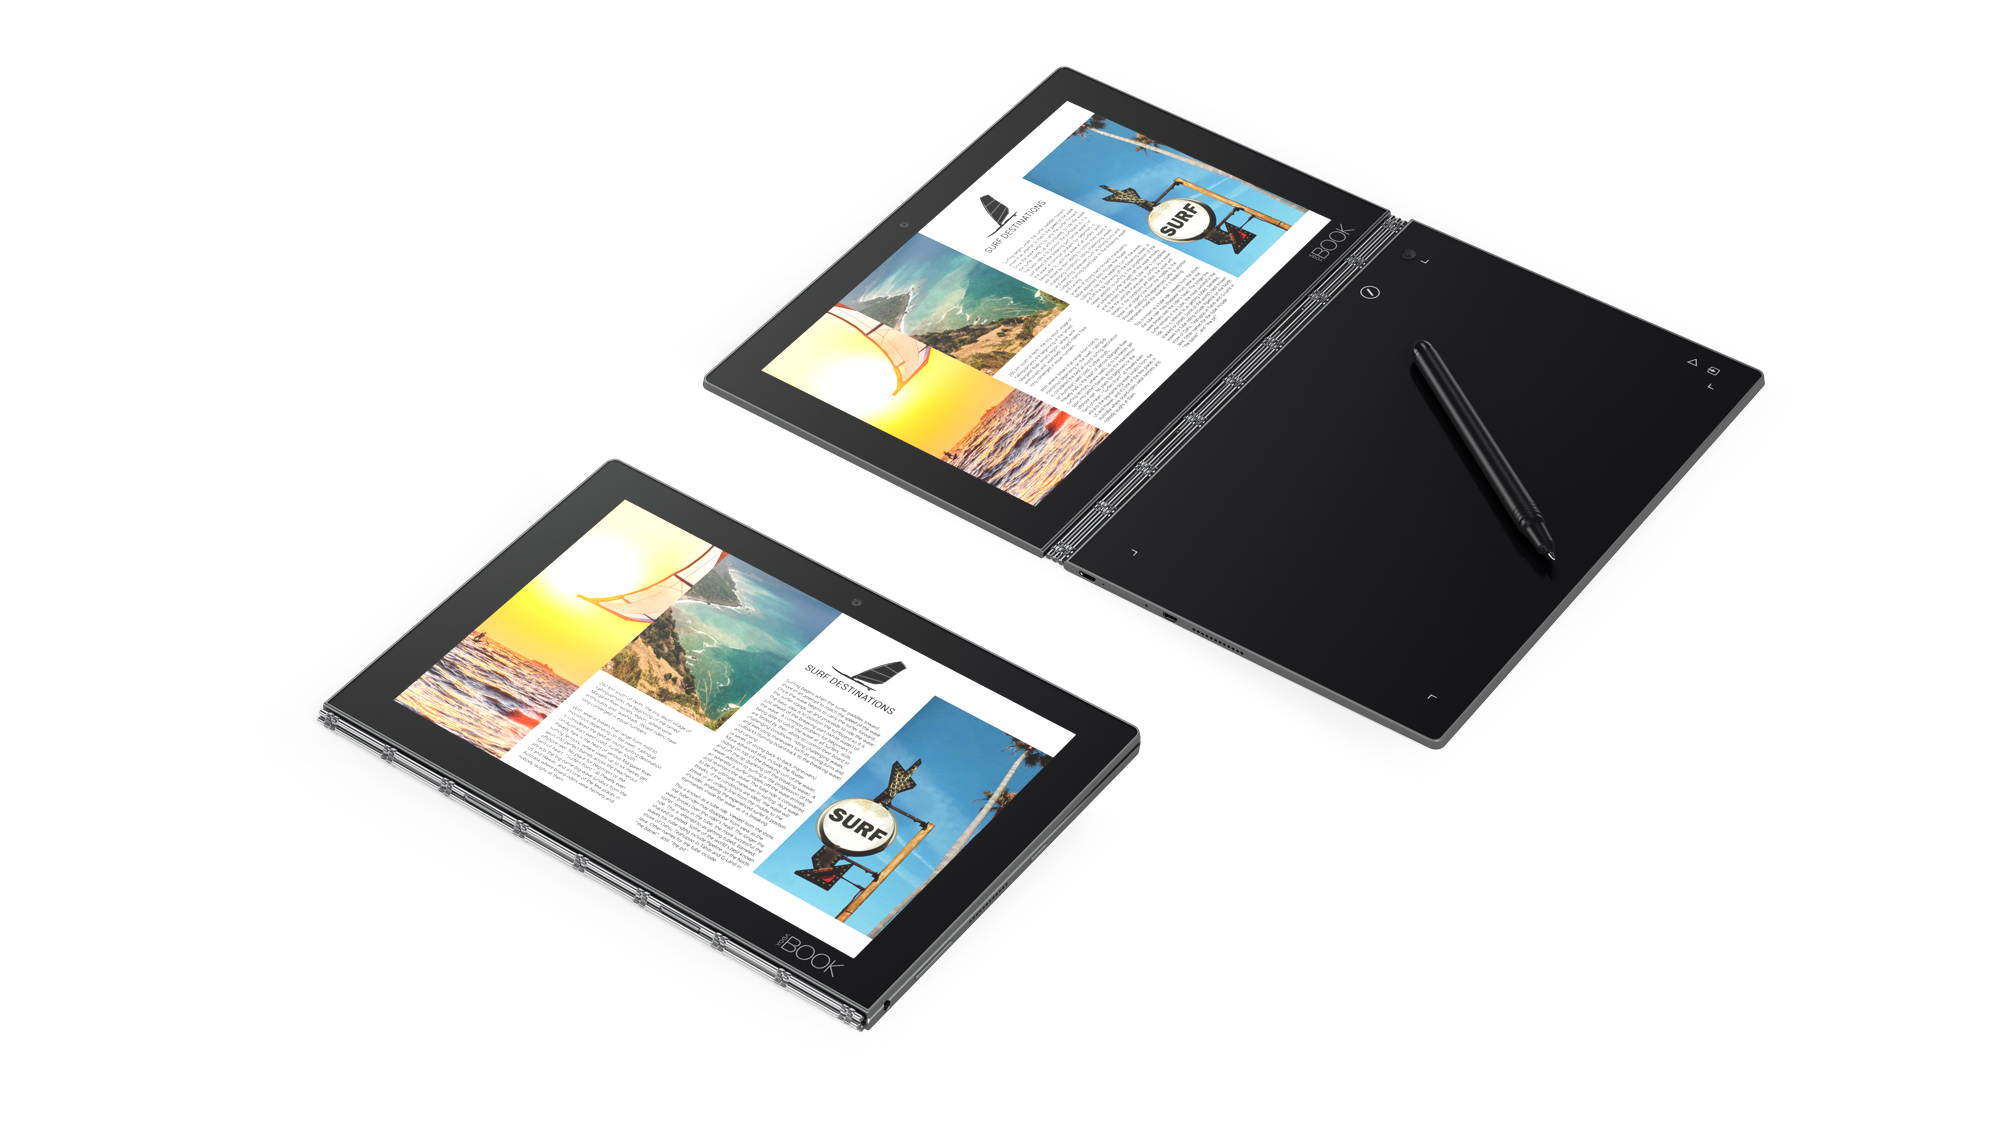 The Lenovo Yoga Book with Windows 10